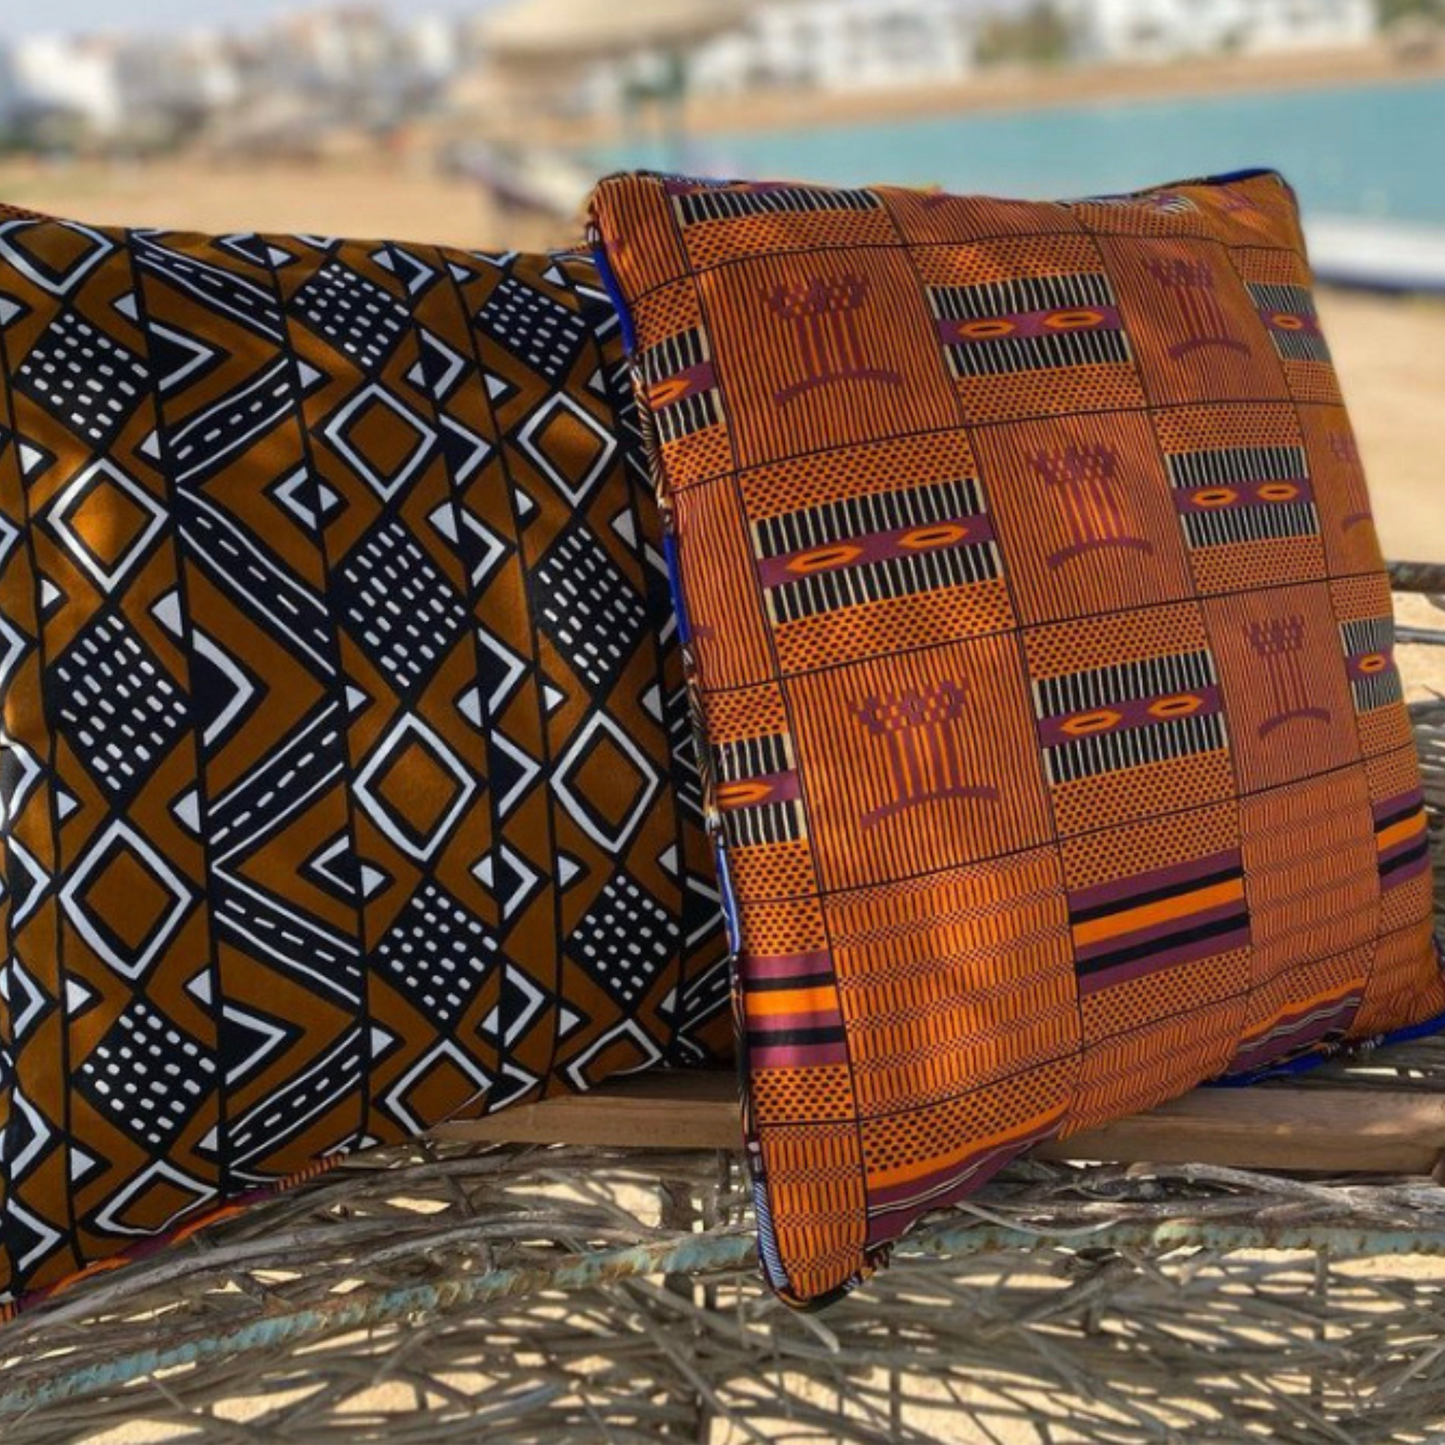 Kitenge 'African Print' Accent Pillow 18"X18"